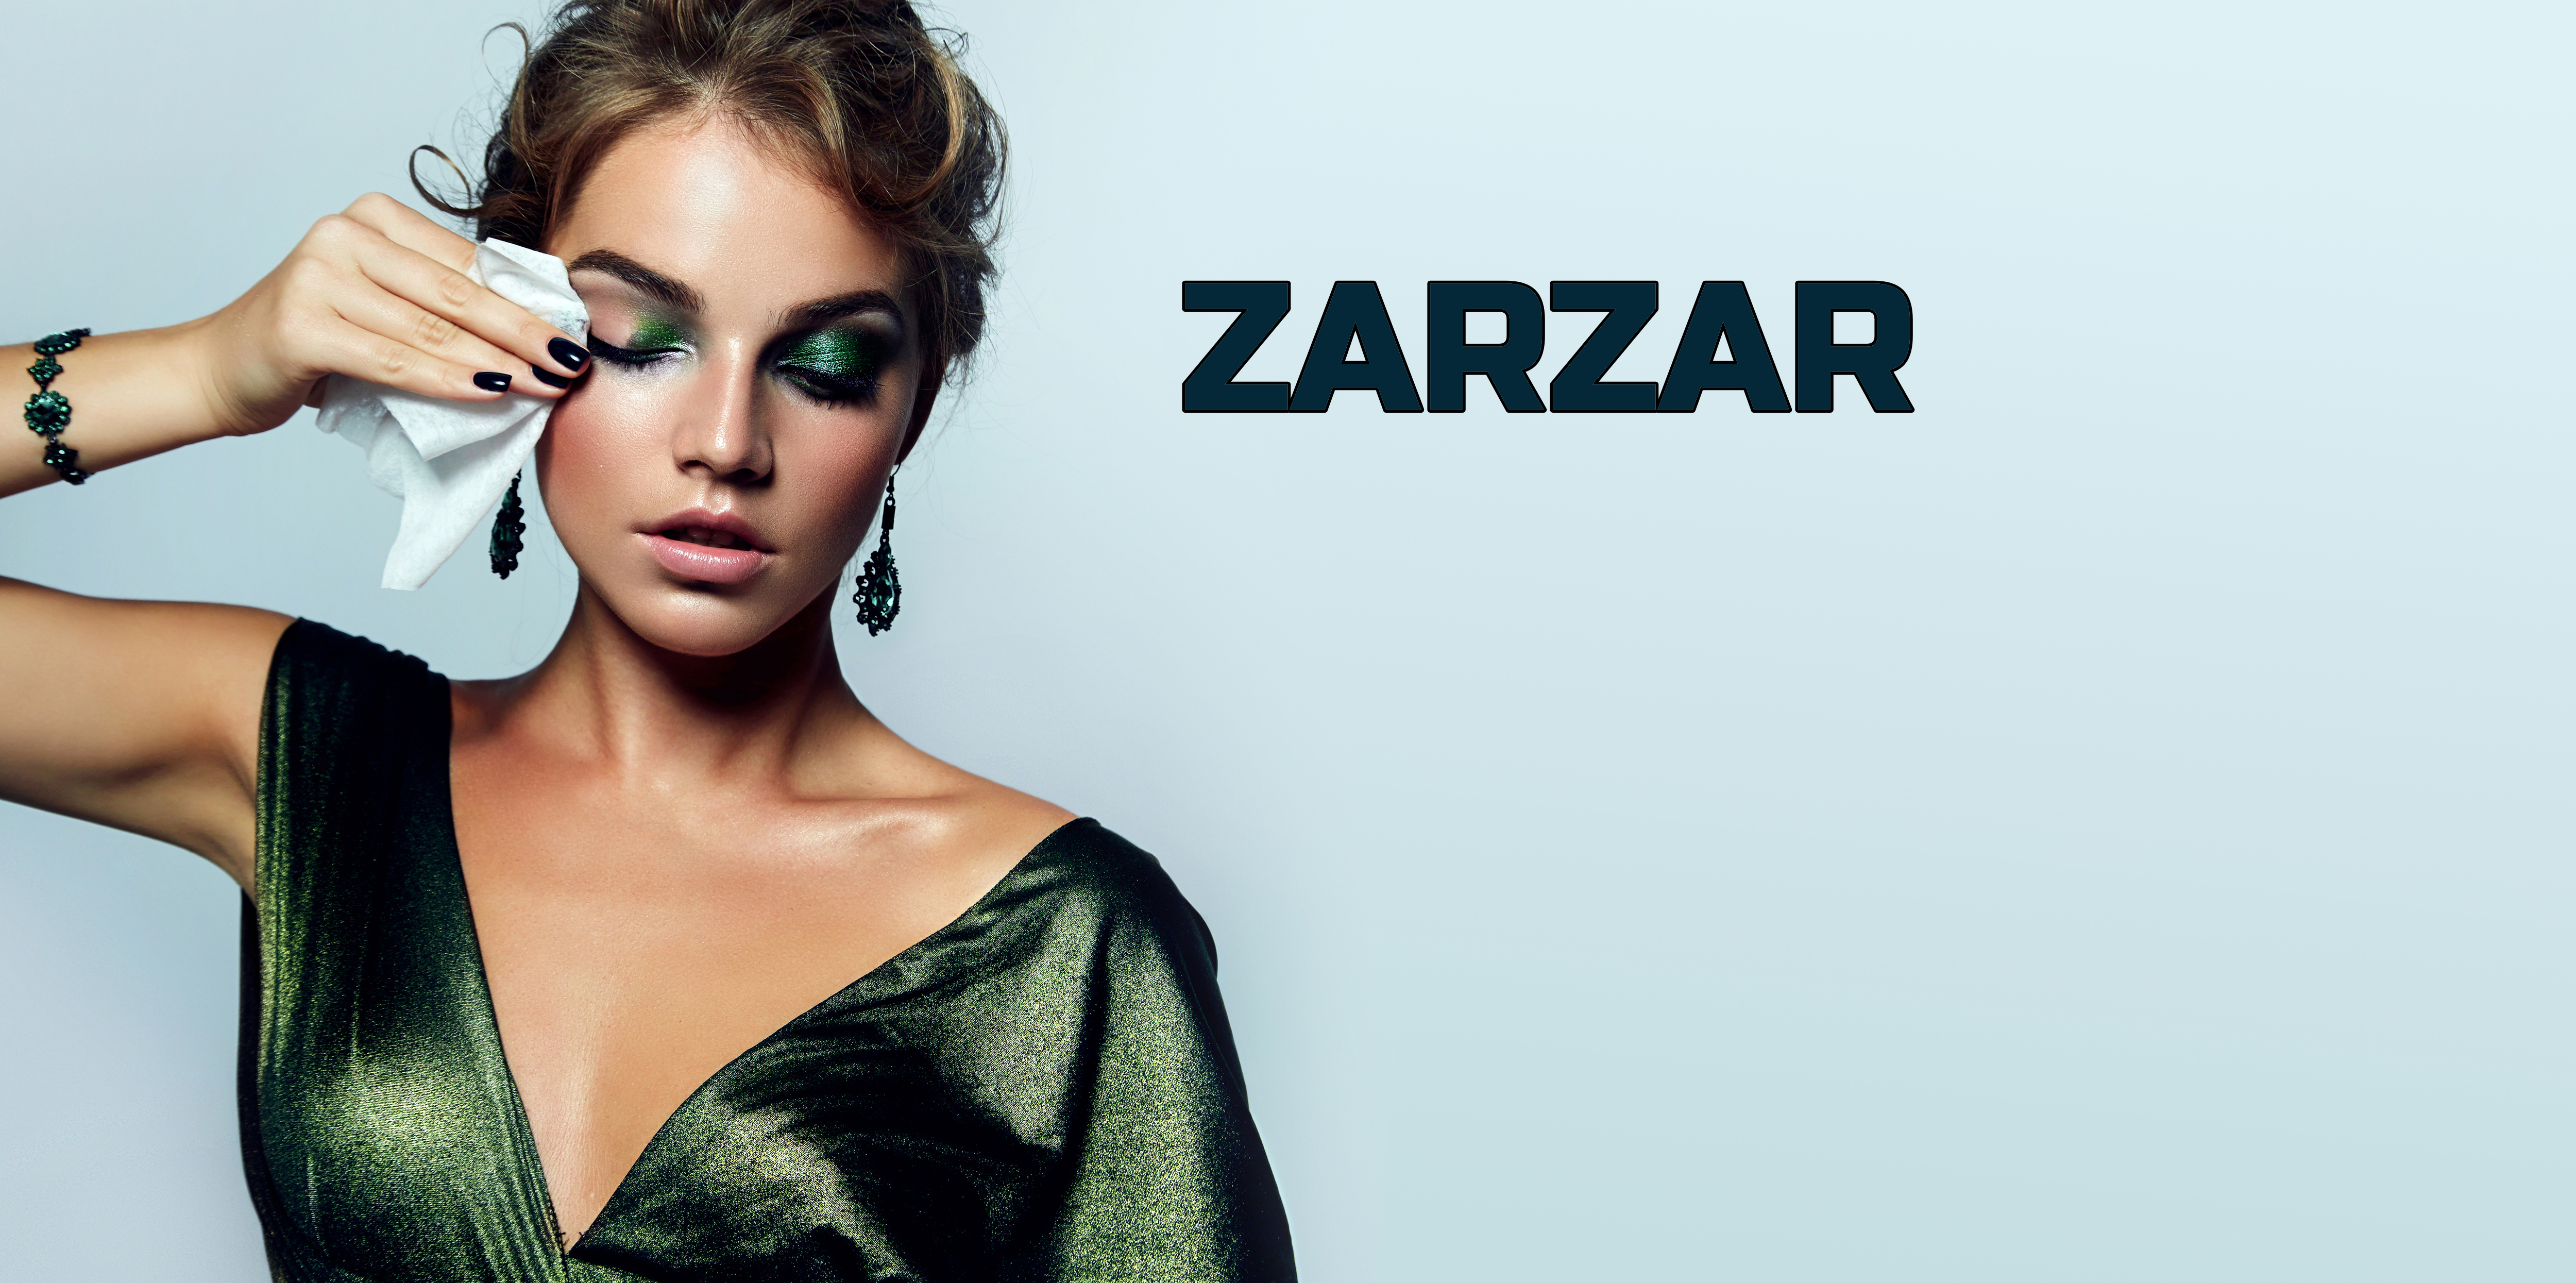 ZARZAR MODELS Beautiful Makeup Models Beauty Models Top Modeling Agencies For Fashion Models.